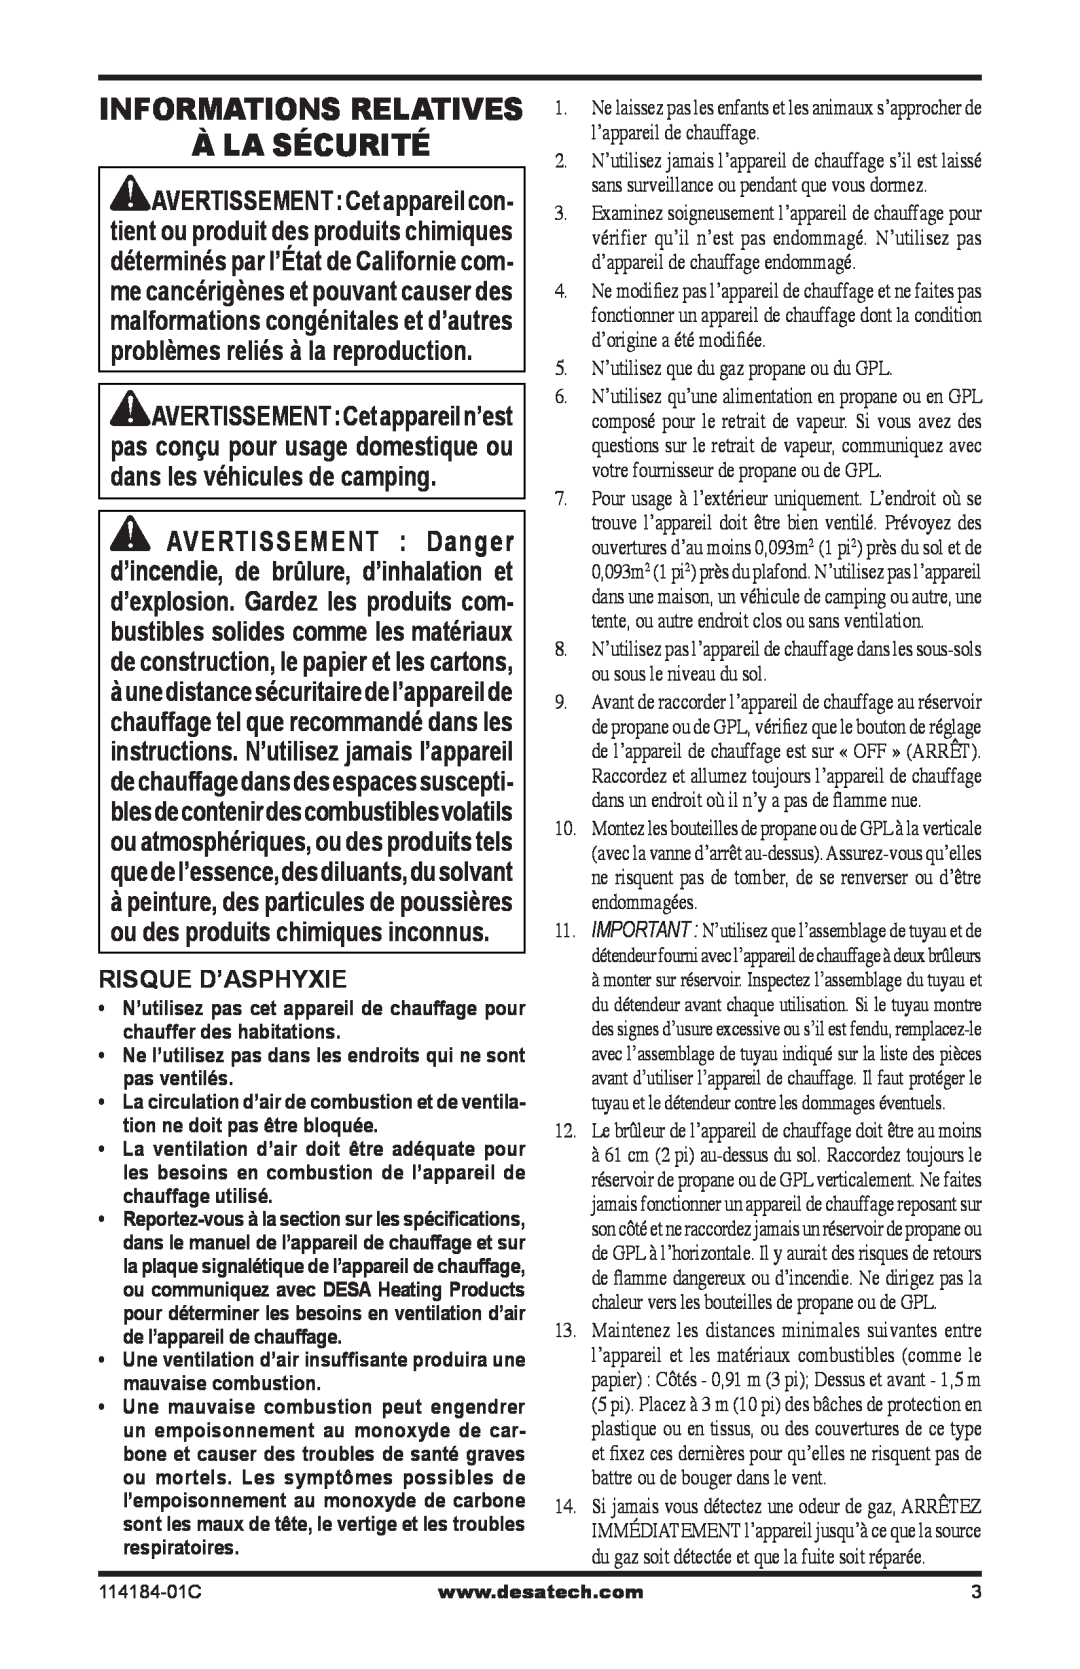 Desa HD15, TT30B, N15 AND TT15 10, HD30B owner manual À La Sécurité, Informations Relatives, Risque D’Asphyxie 